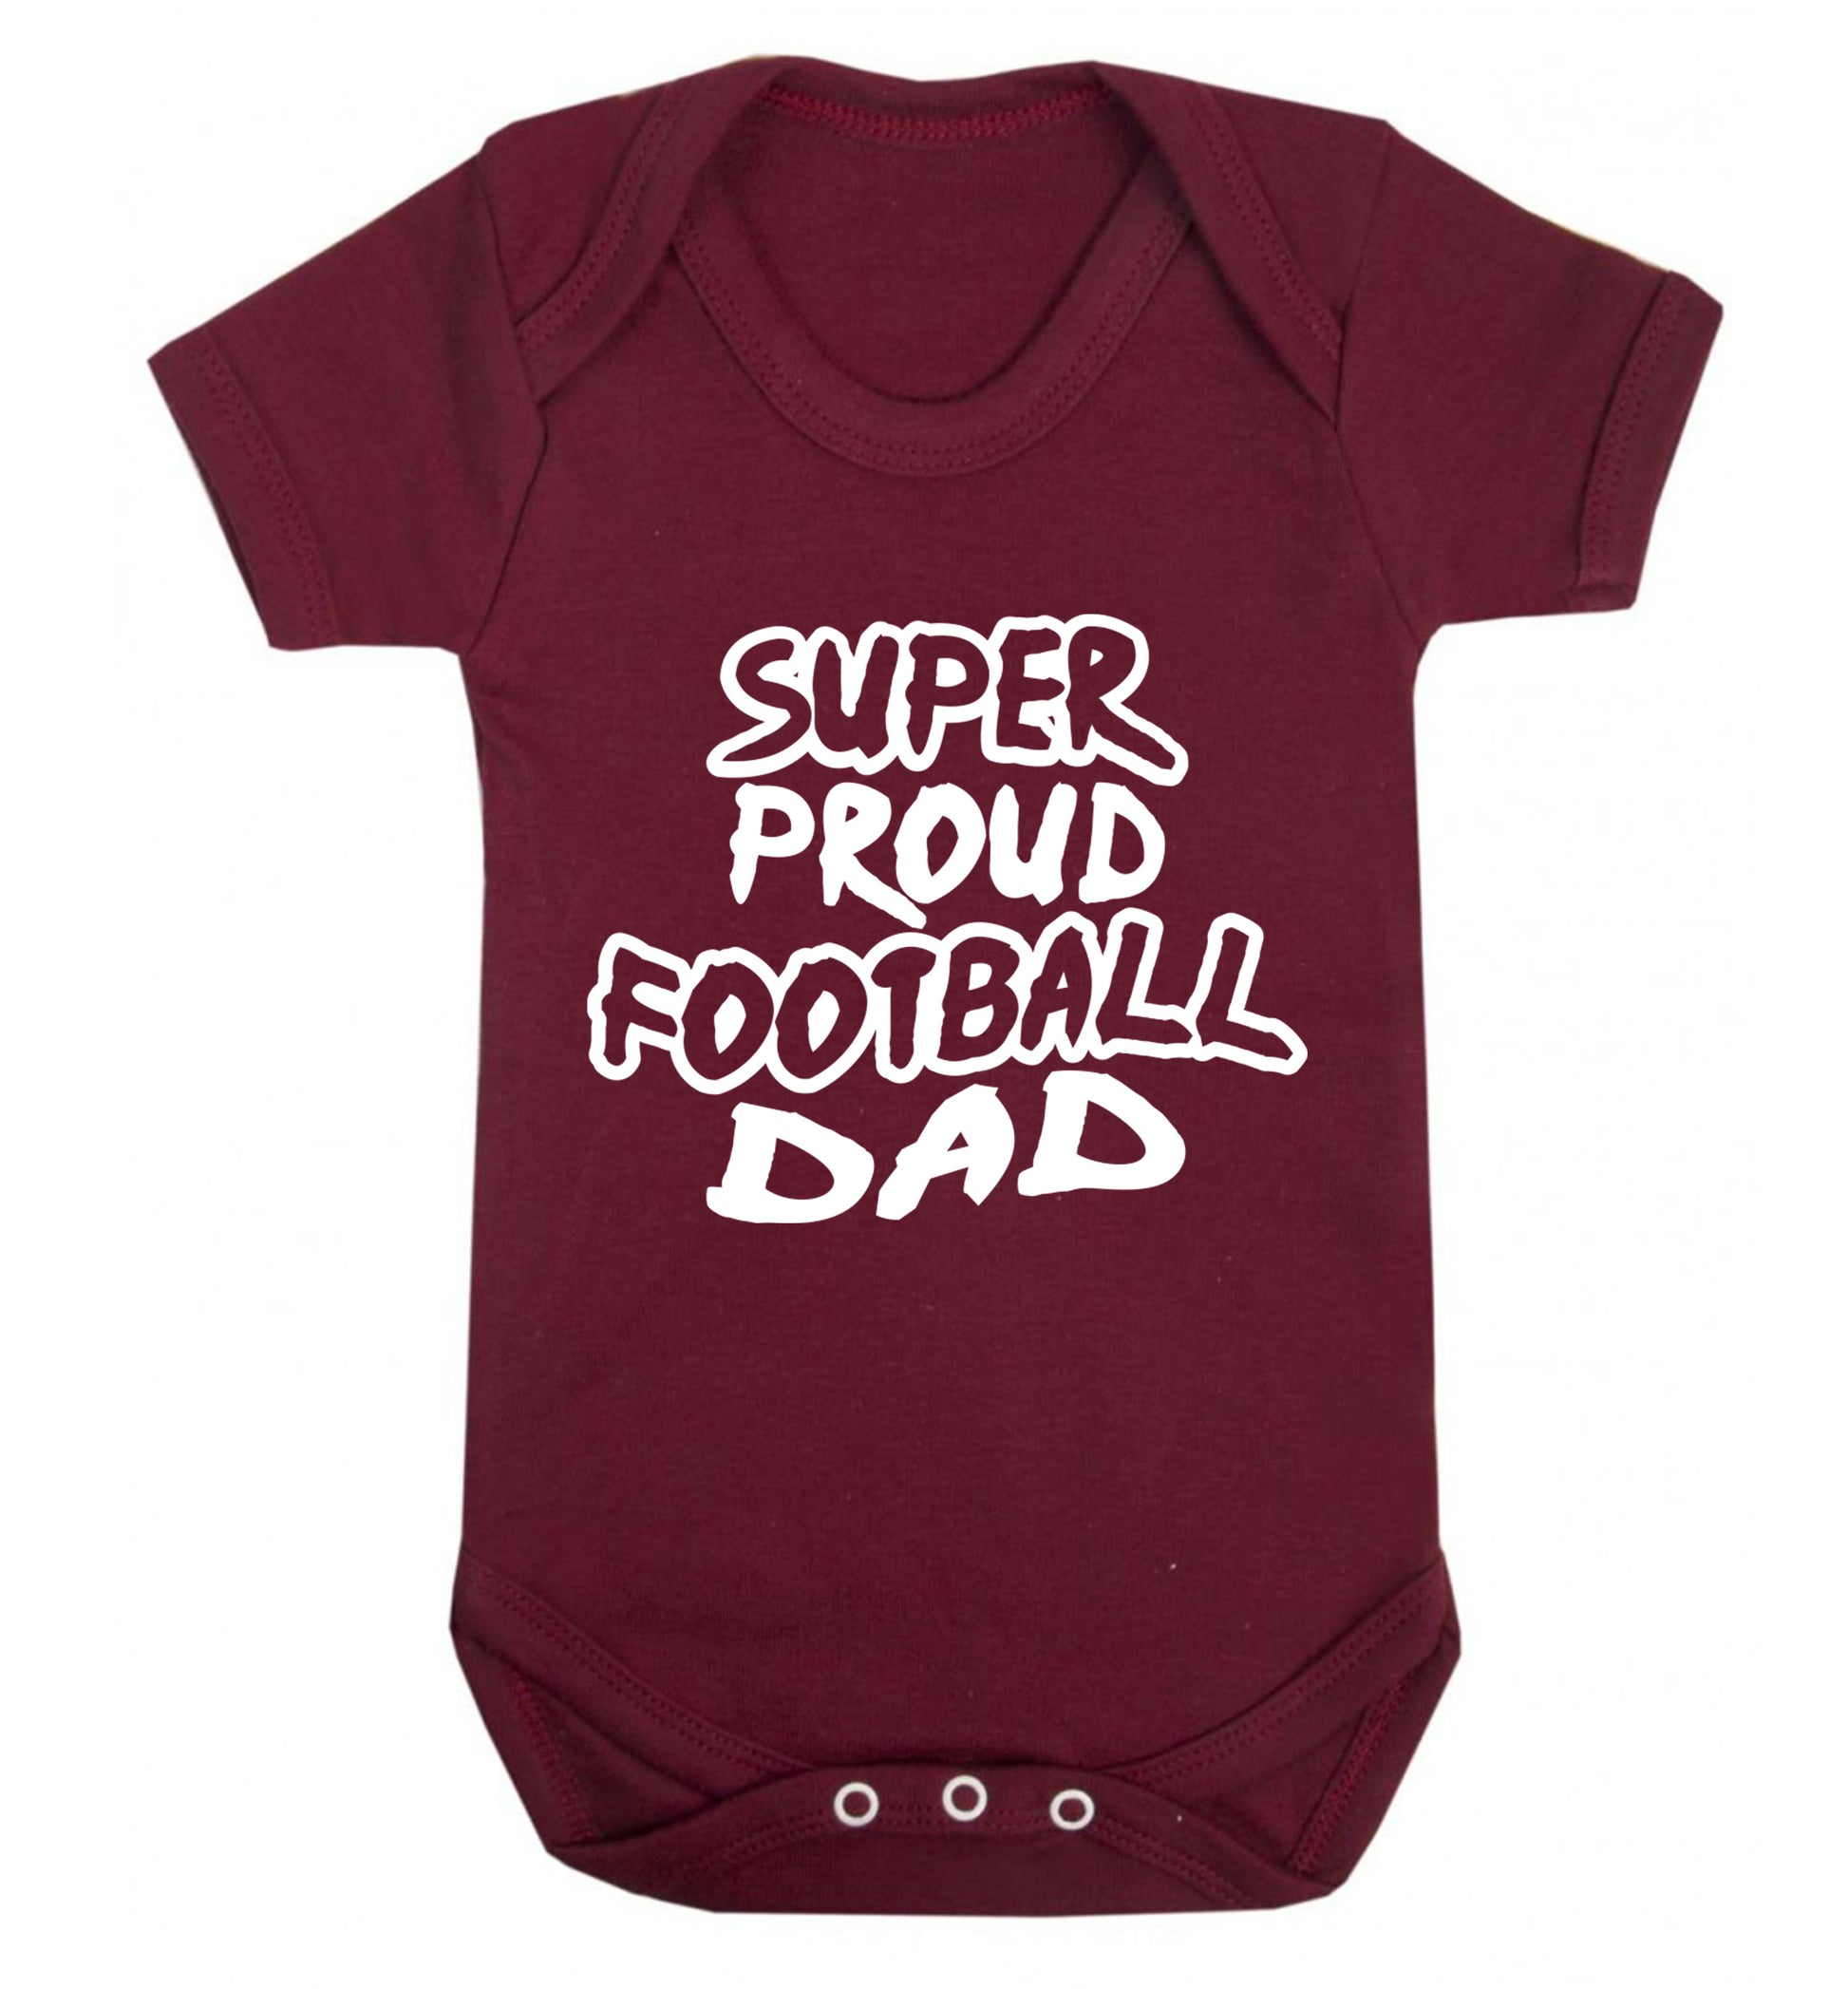 Super proud football dad Baby Vest maroon 18-24 months